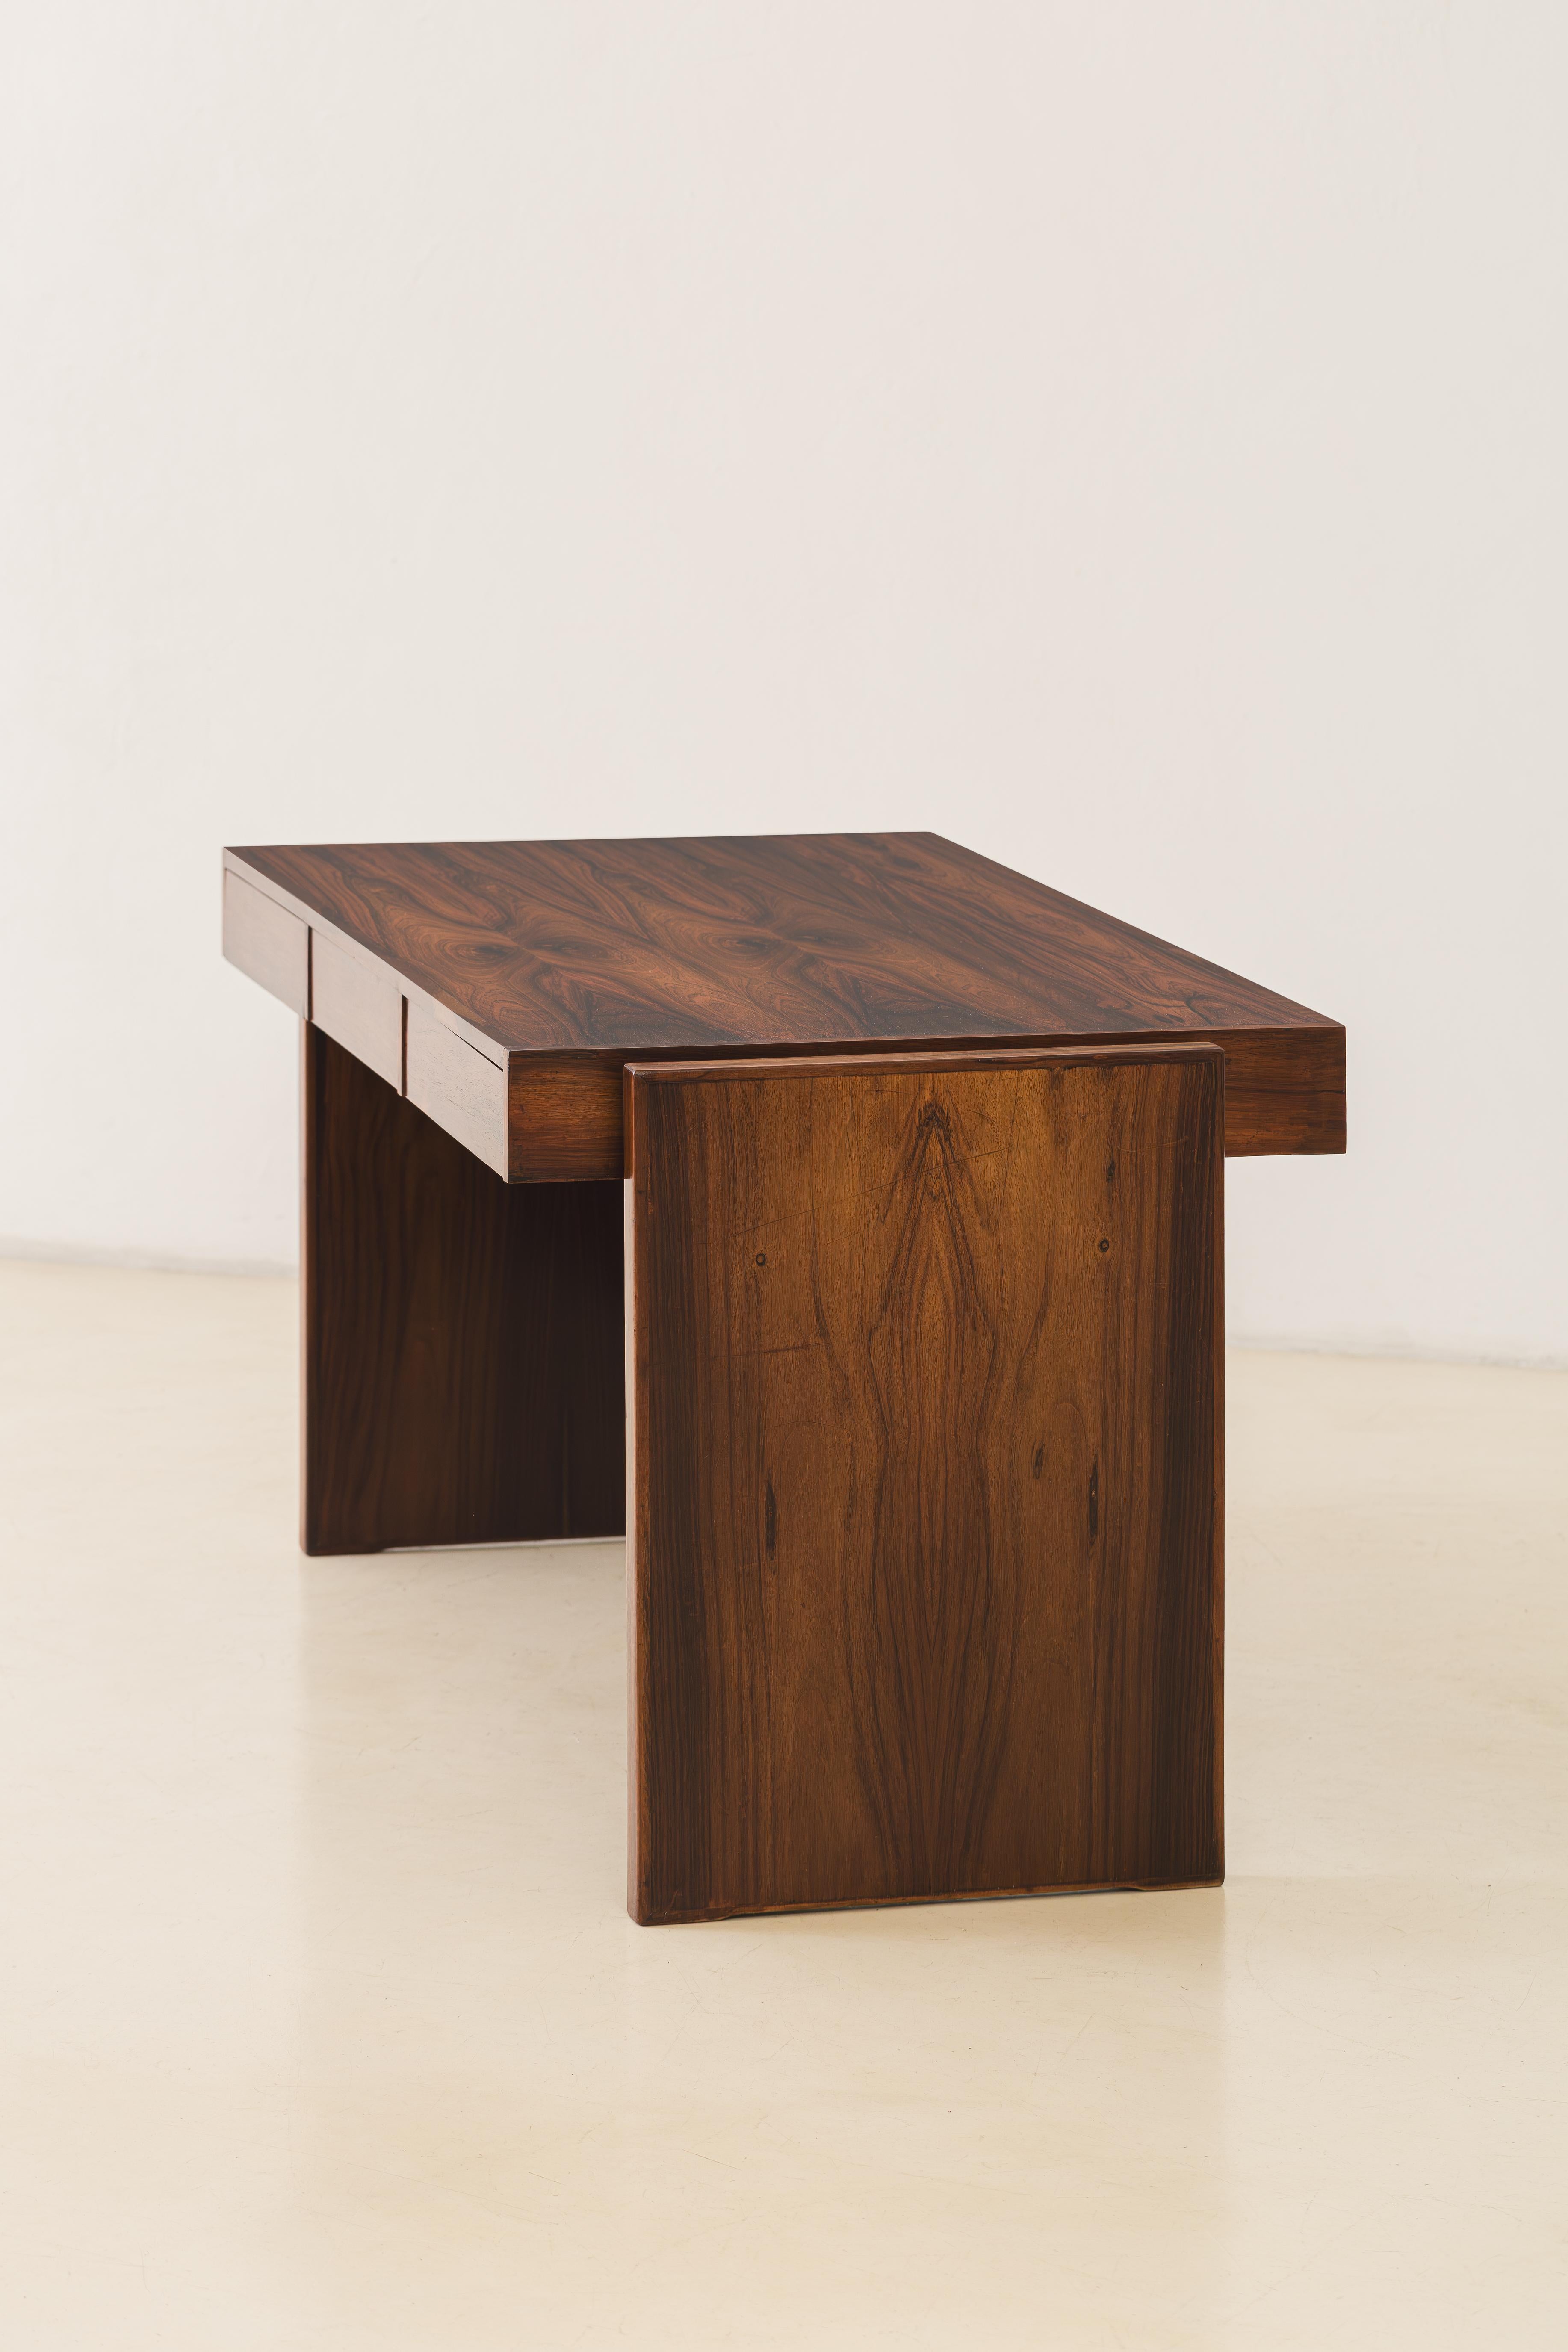 Rosewood Desk by Joaquim Tenreiro, Bloch Editors, 1960s, Brazilian Midcentury For Sale 2